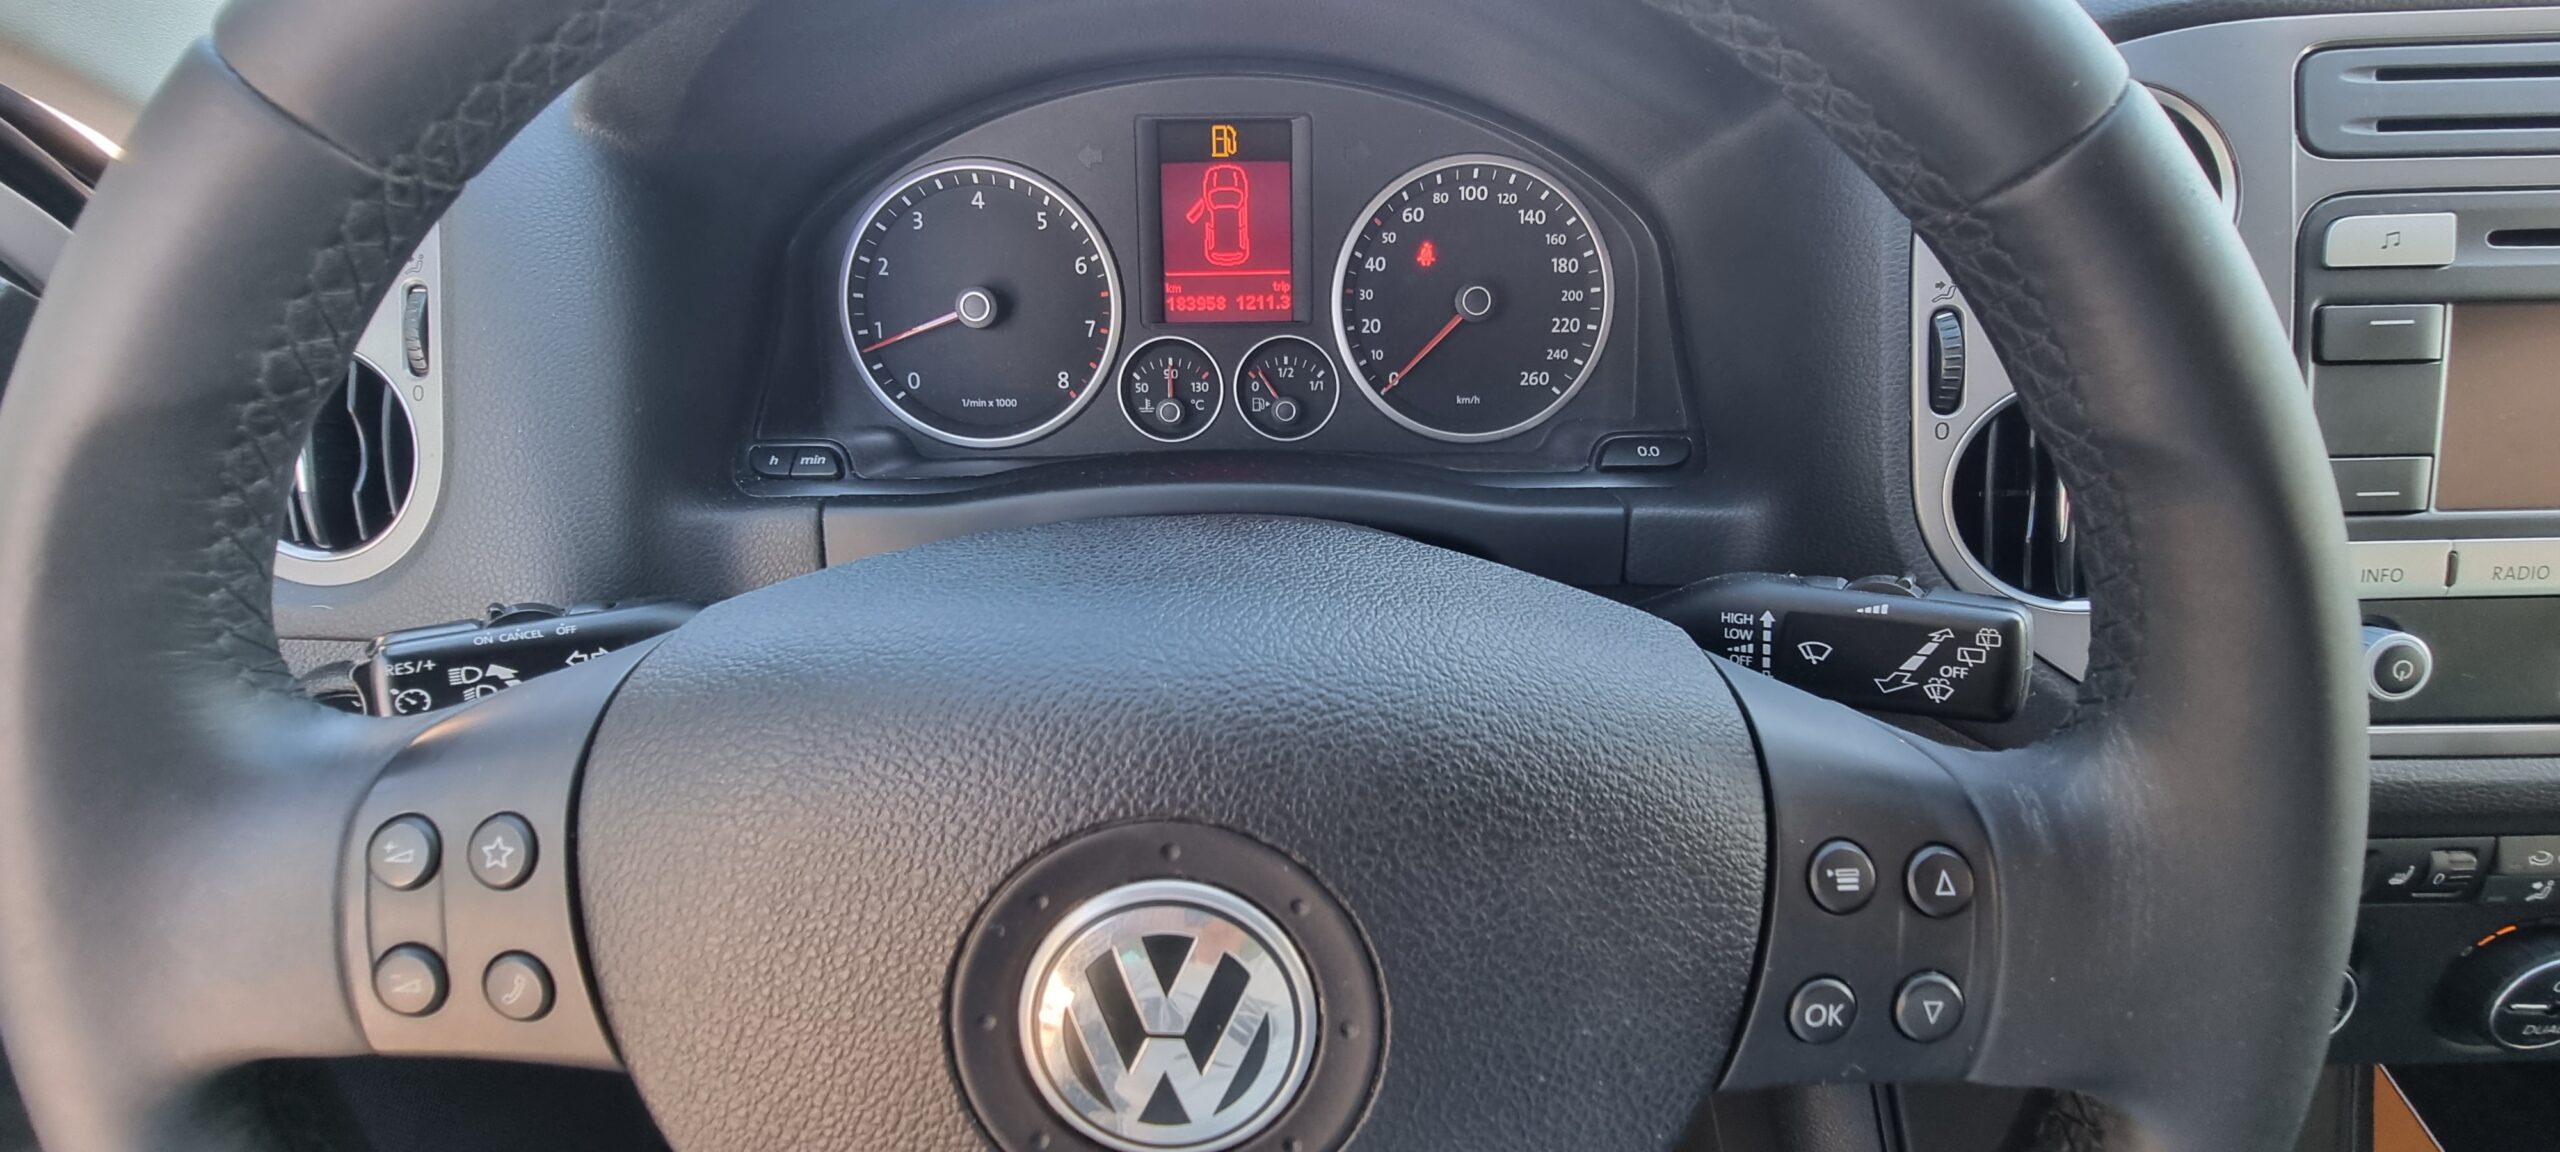 VW TIGUAN 1.4 TSI    AN 2010